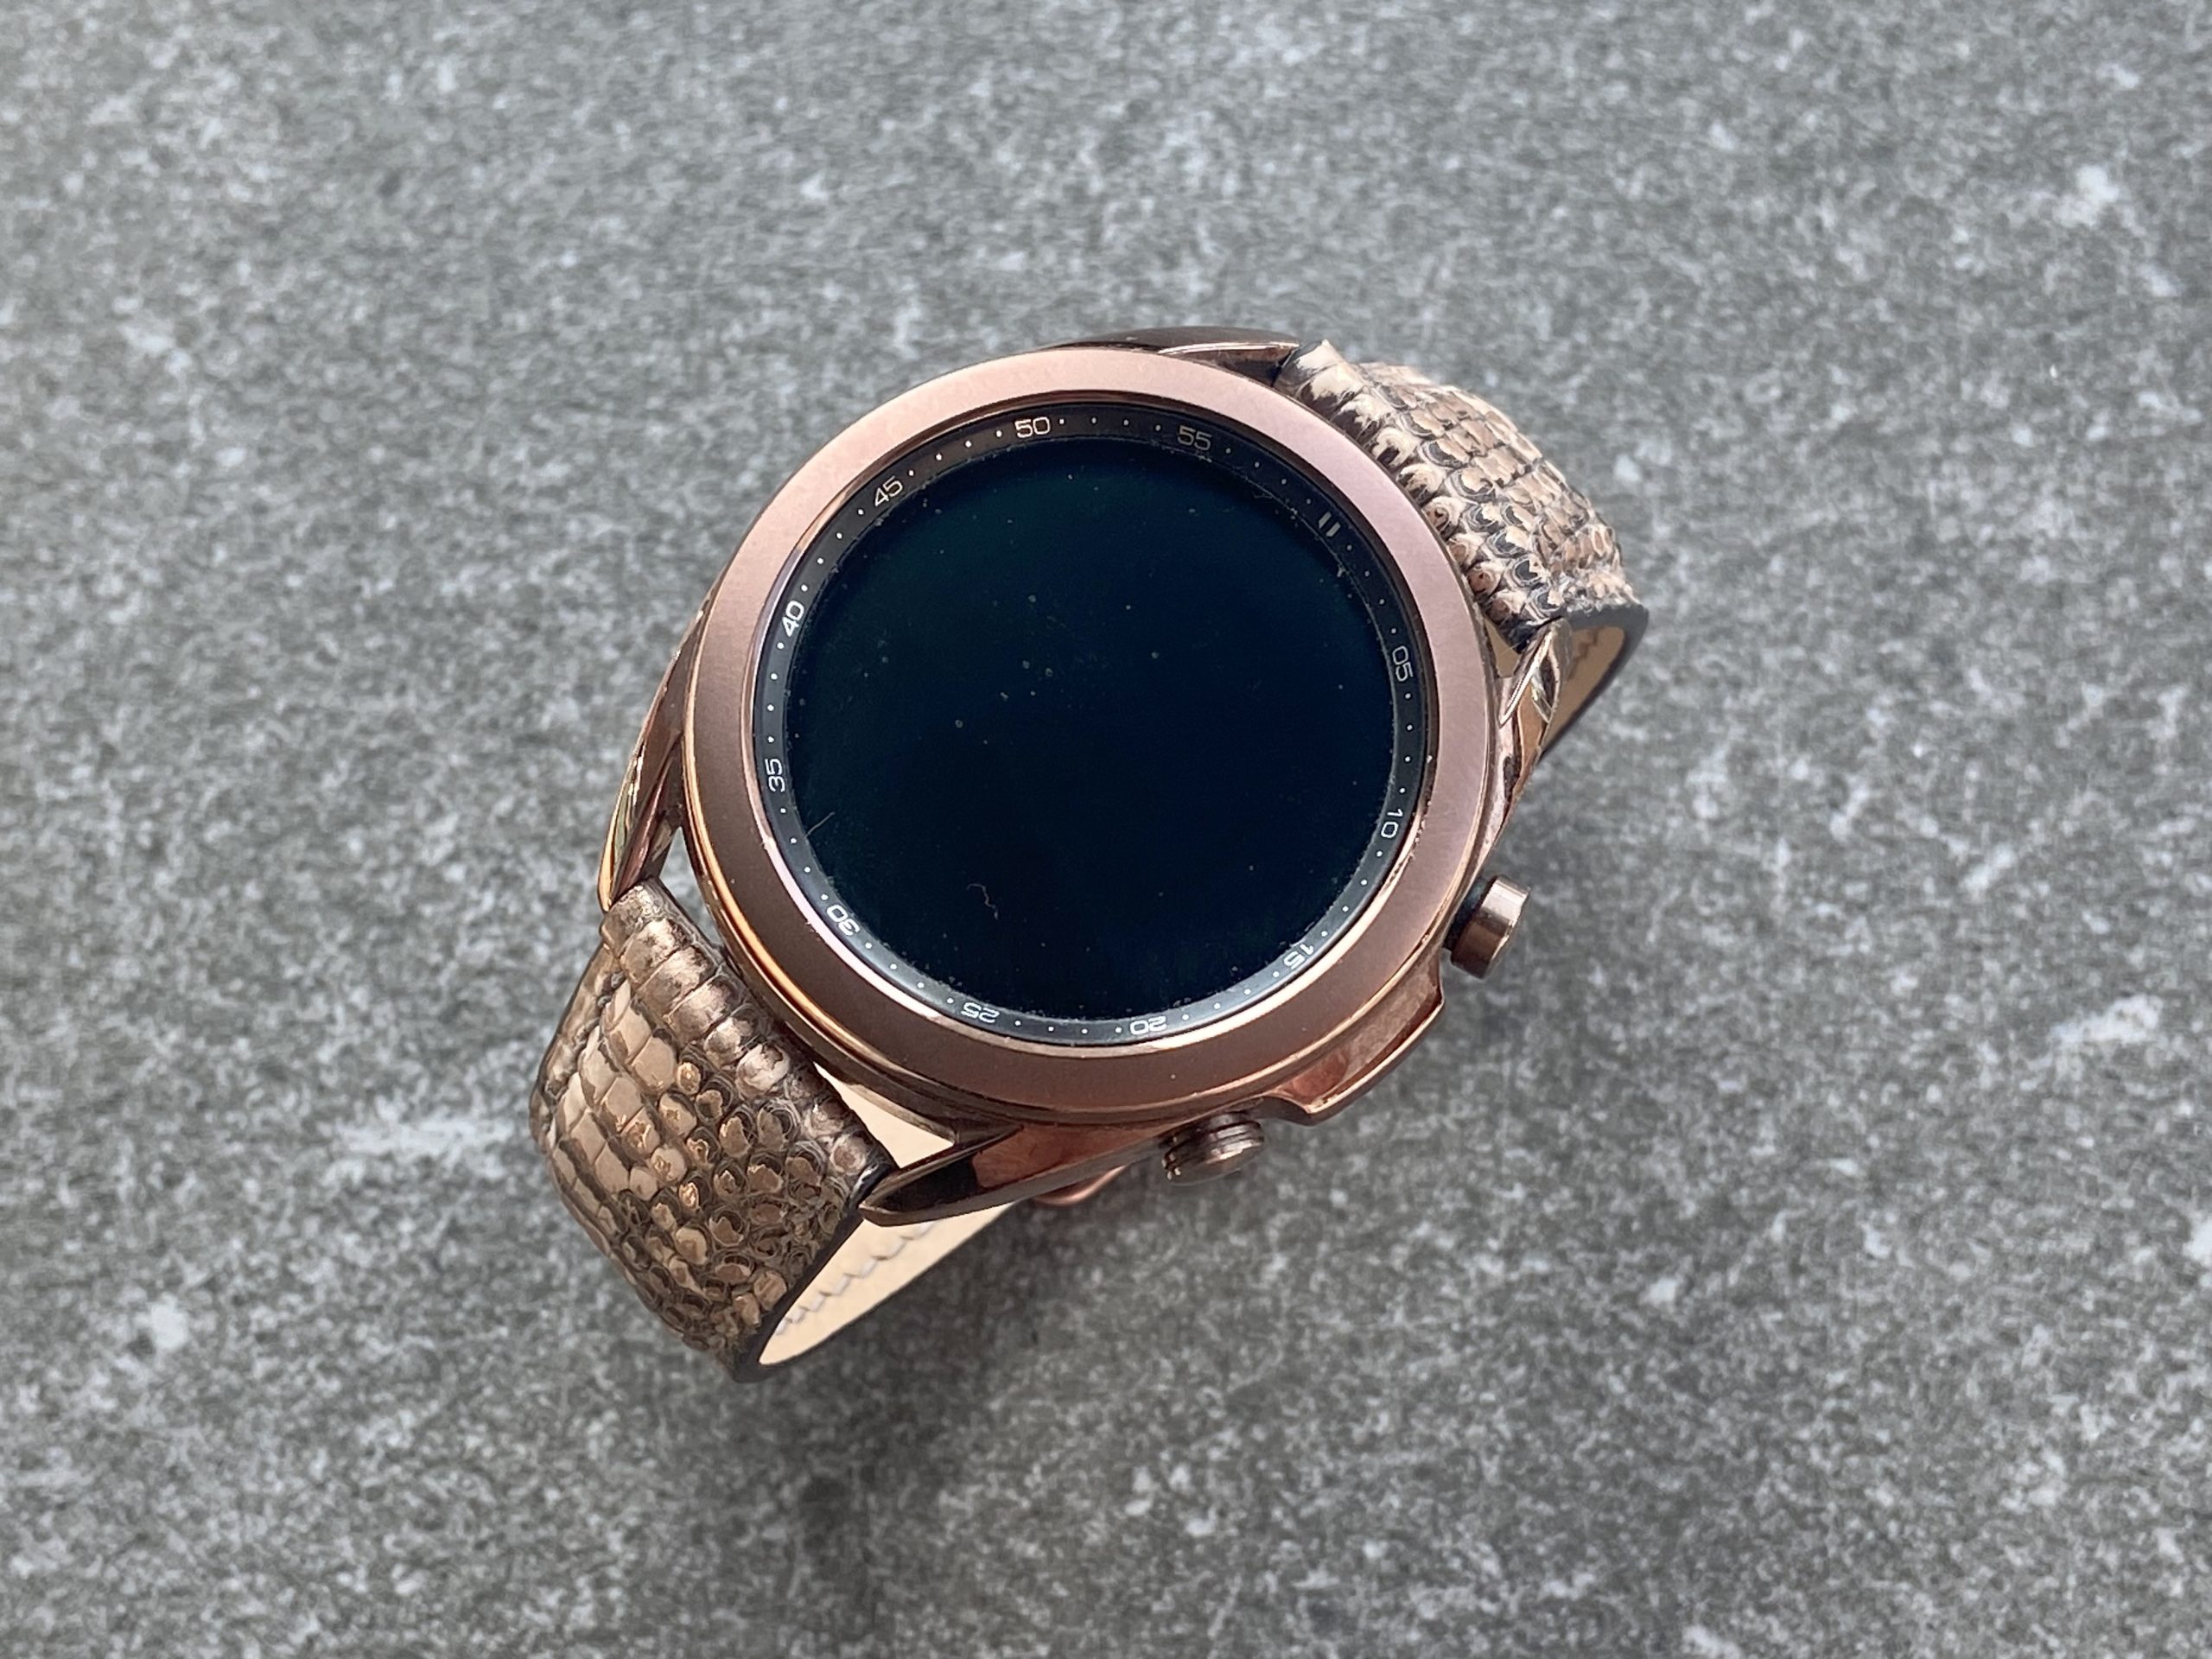 Customized strap for Samsung Galaxy watch Bronze